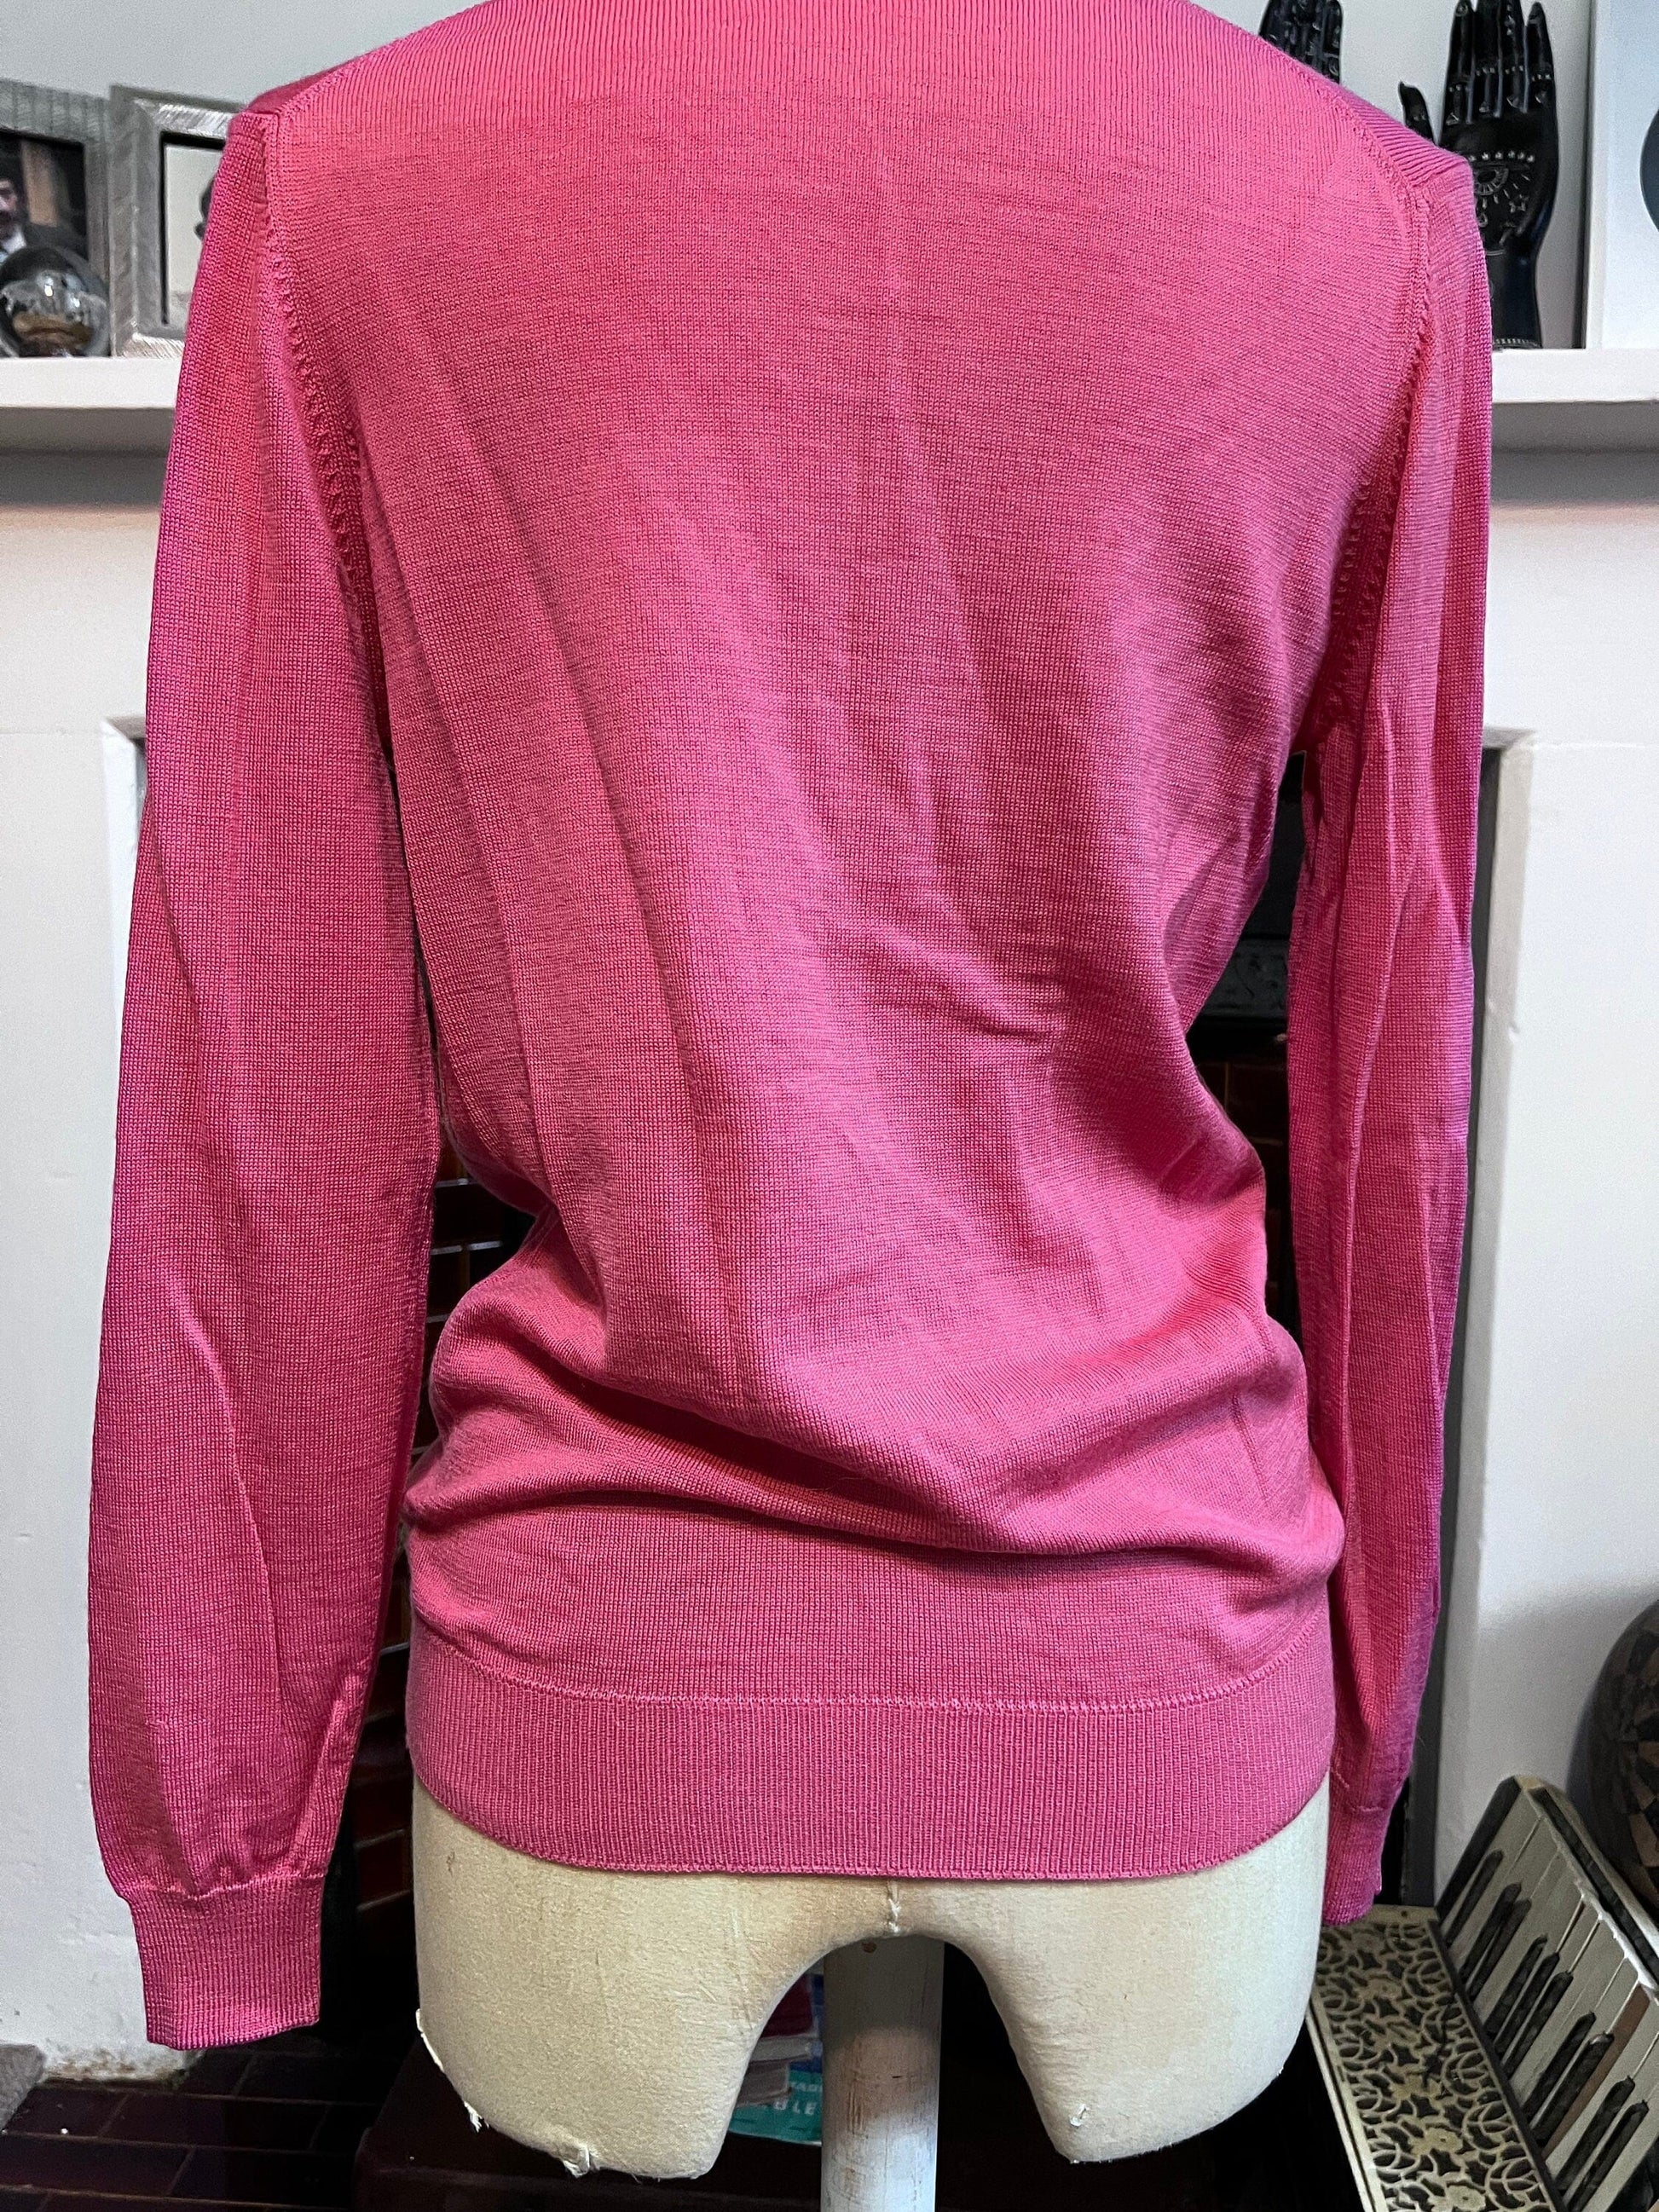 Vintage pink jaeger cardigan, pink cardigan, pink vintage knitwear, vintage cardigan, vintage cardi, 1980s, vintage knitwear, jaeger